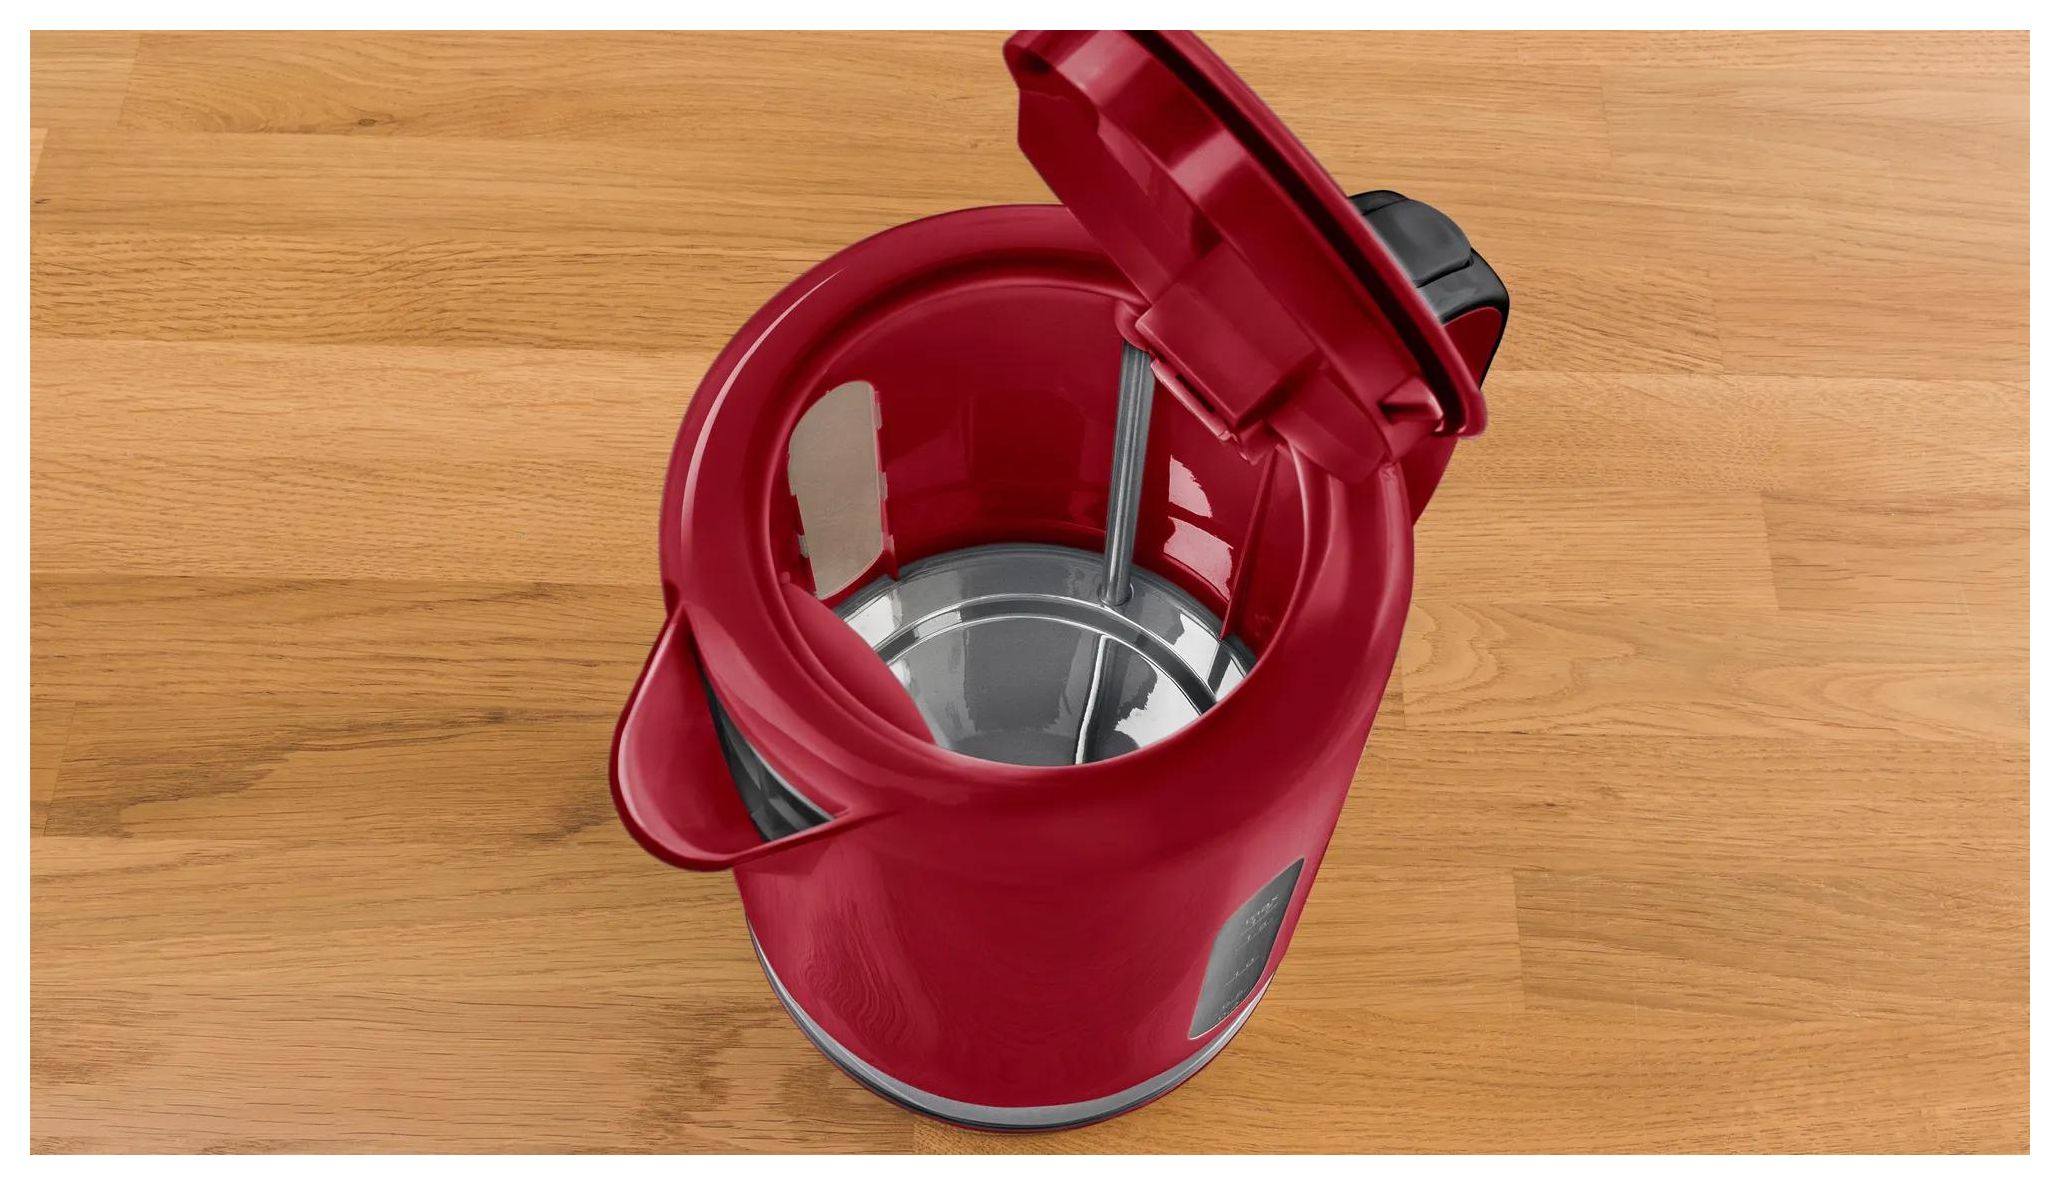 (Grau, Wasserkocher von W expert l Technomarkt Bosch 2200 TWK6A514 Rot) 1,7